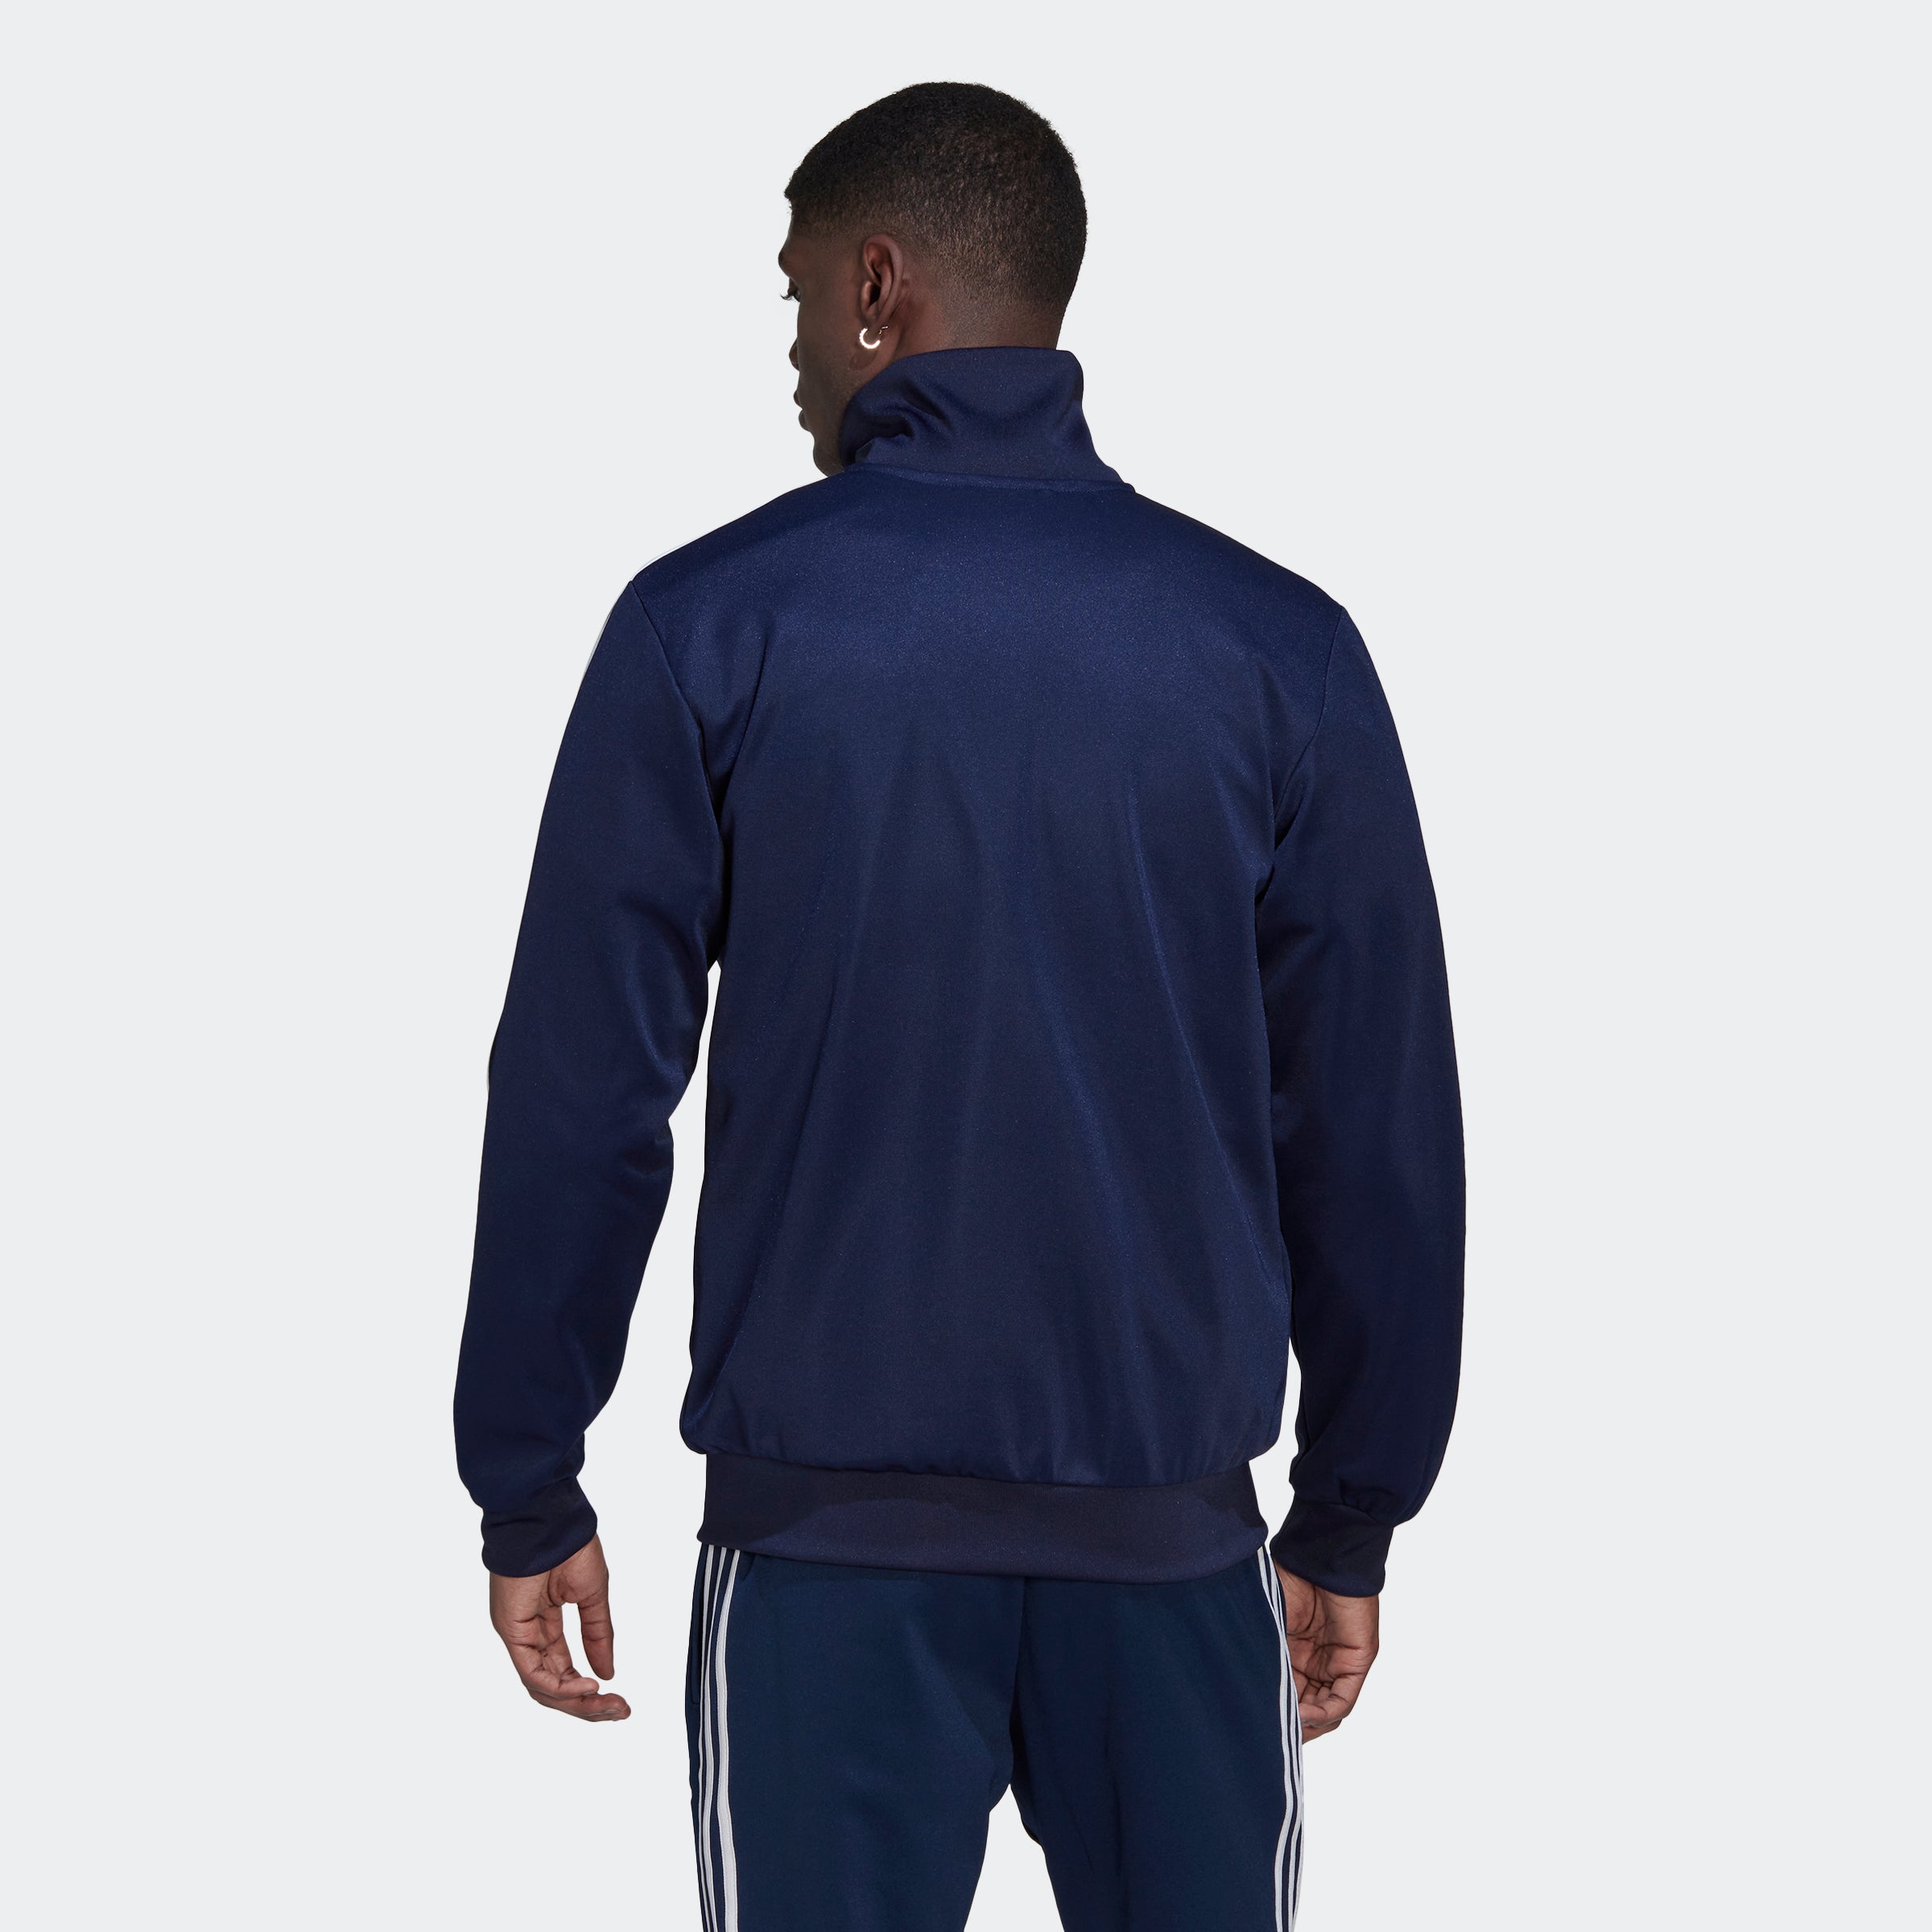 Adidas Limited Edition Miami Heat Track Jacket Mens Size Medium EUC!